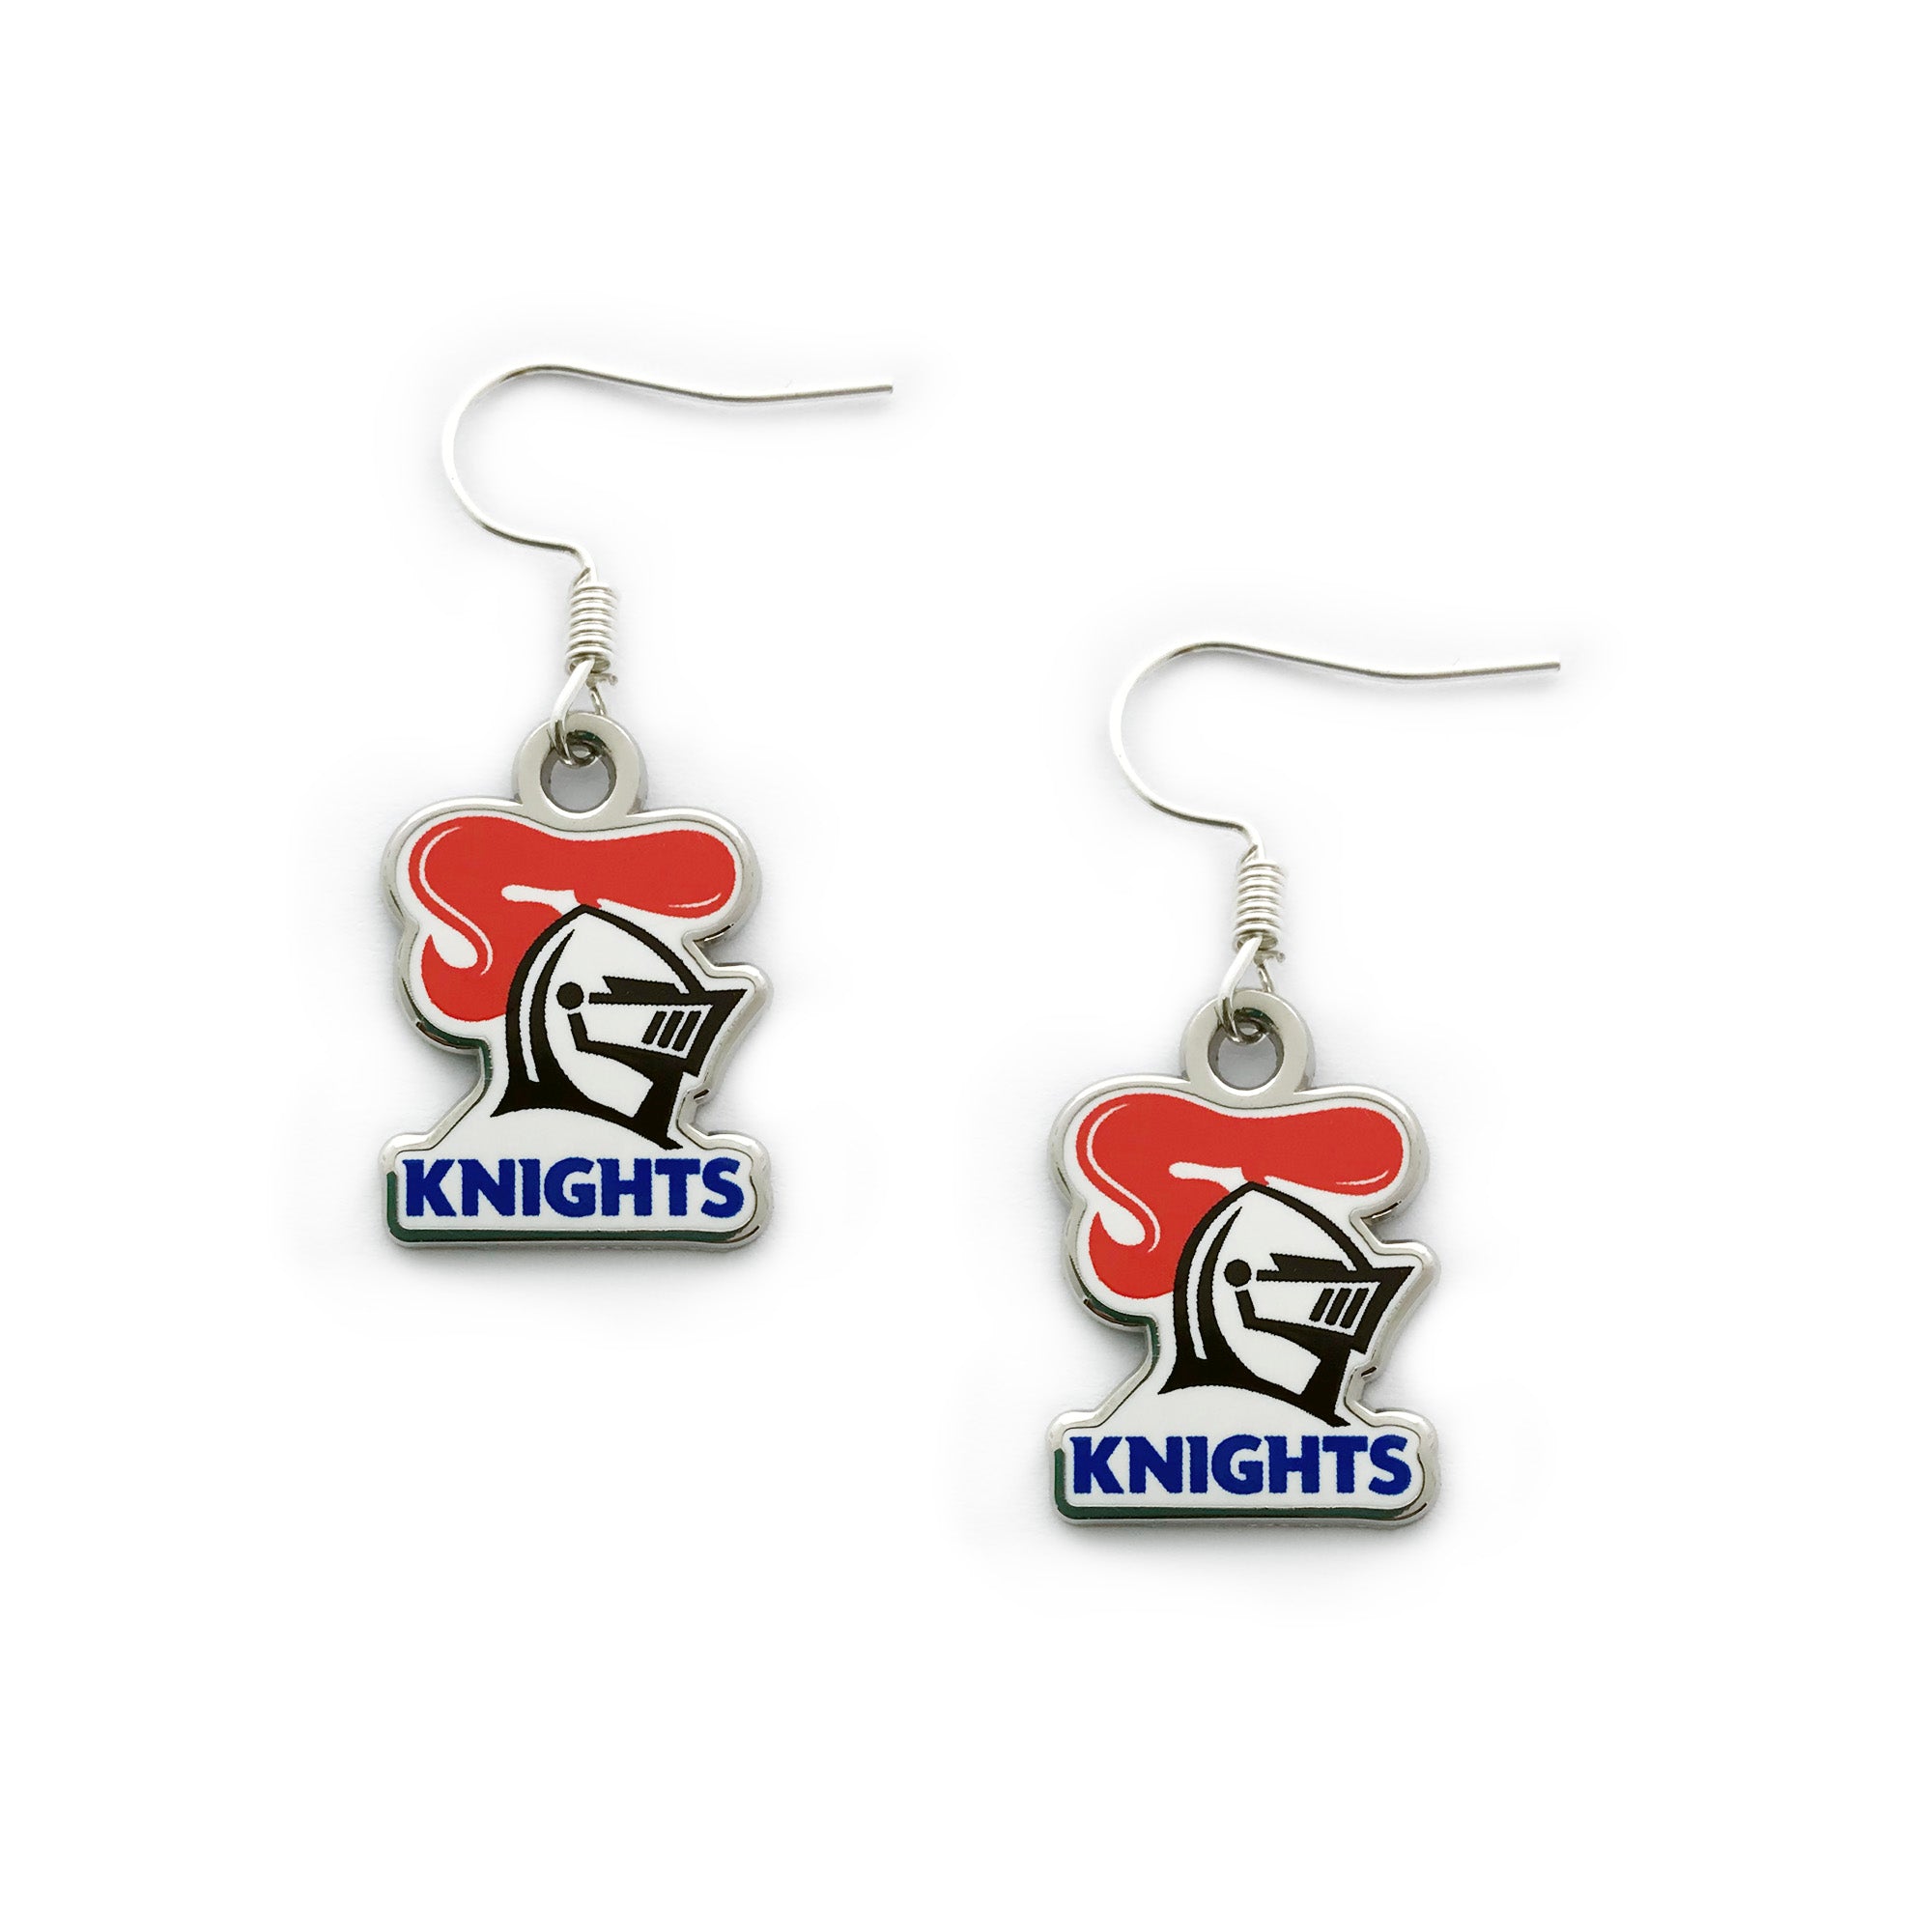 Newcastle Knights NRL Earrings